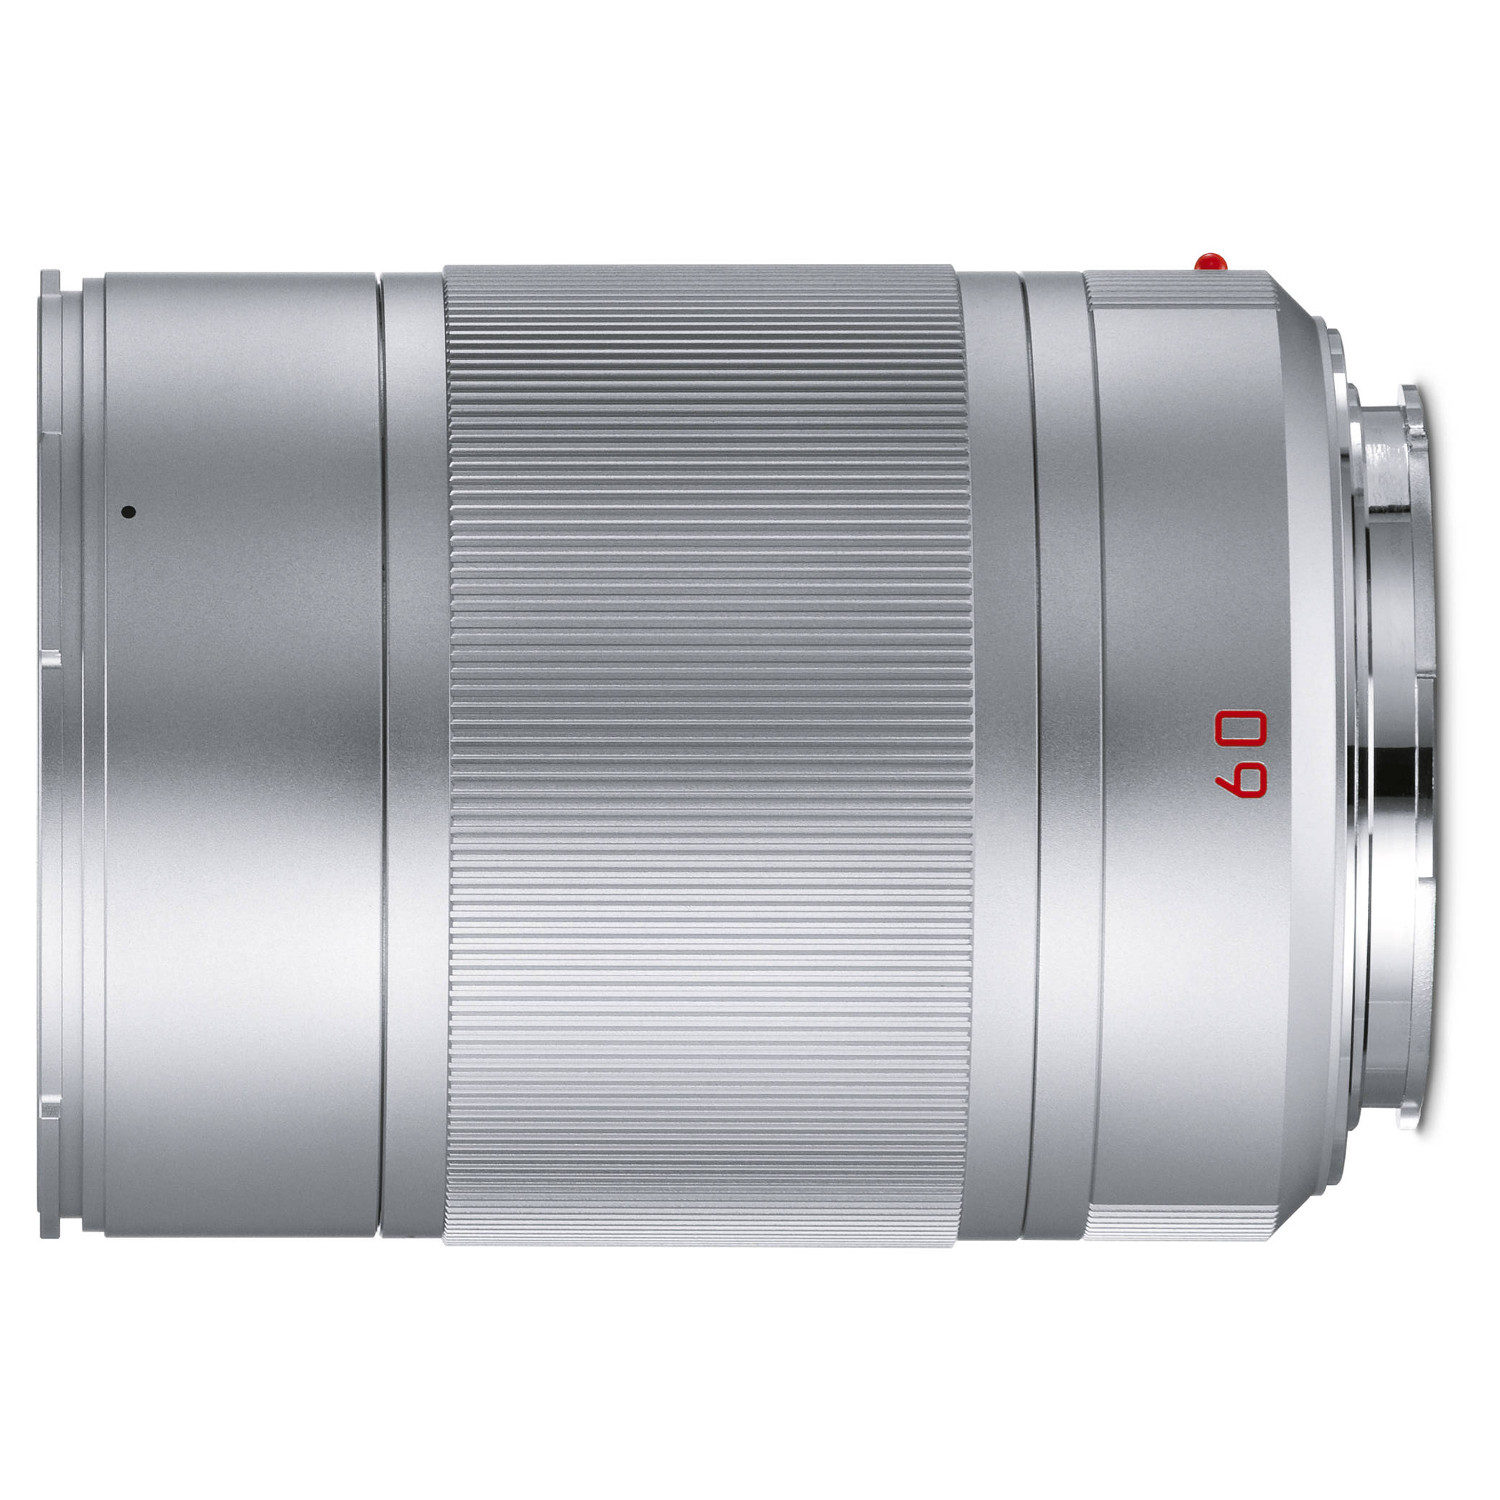 Image of Leica APO-Macro-Elmarit-TL 60mm F/2.8 ASPH zilver